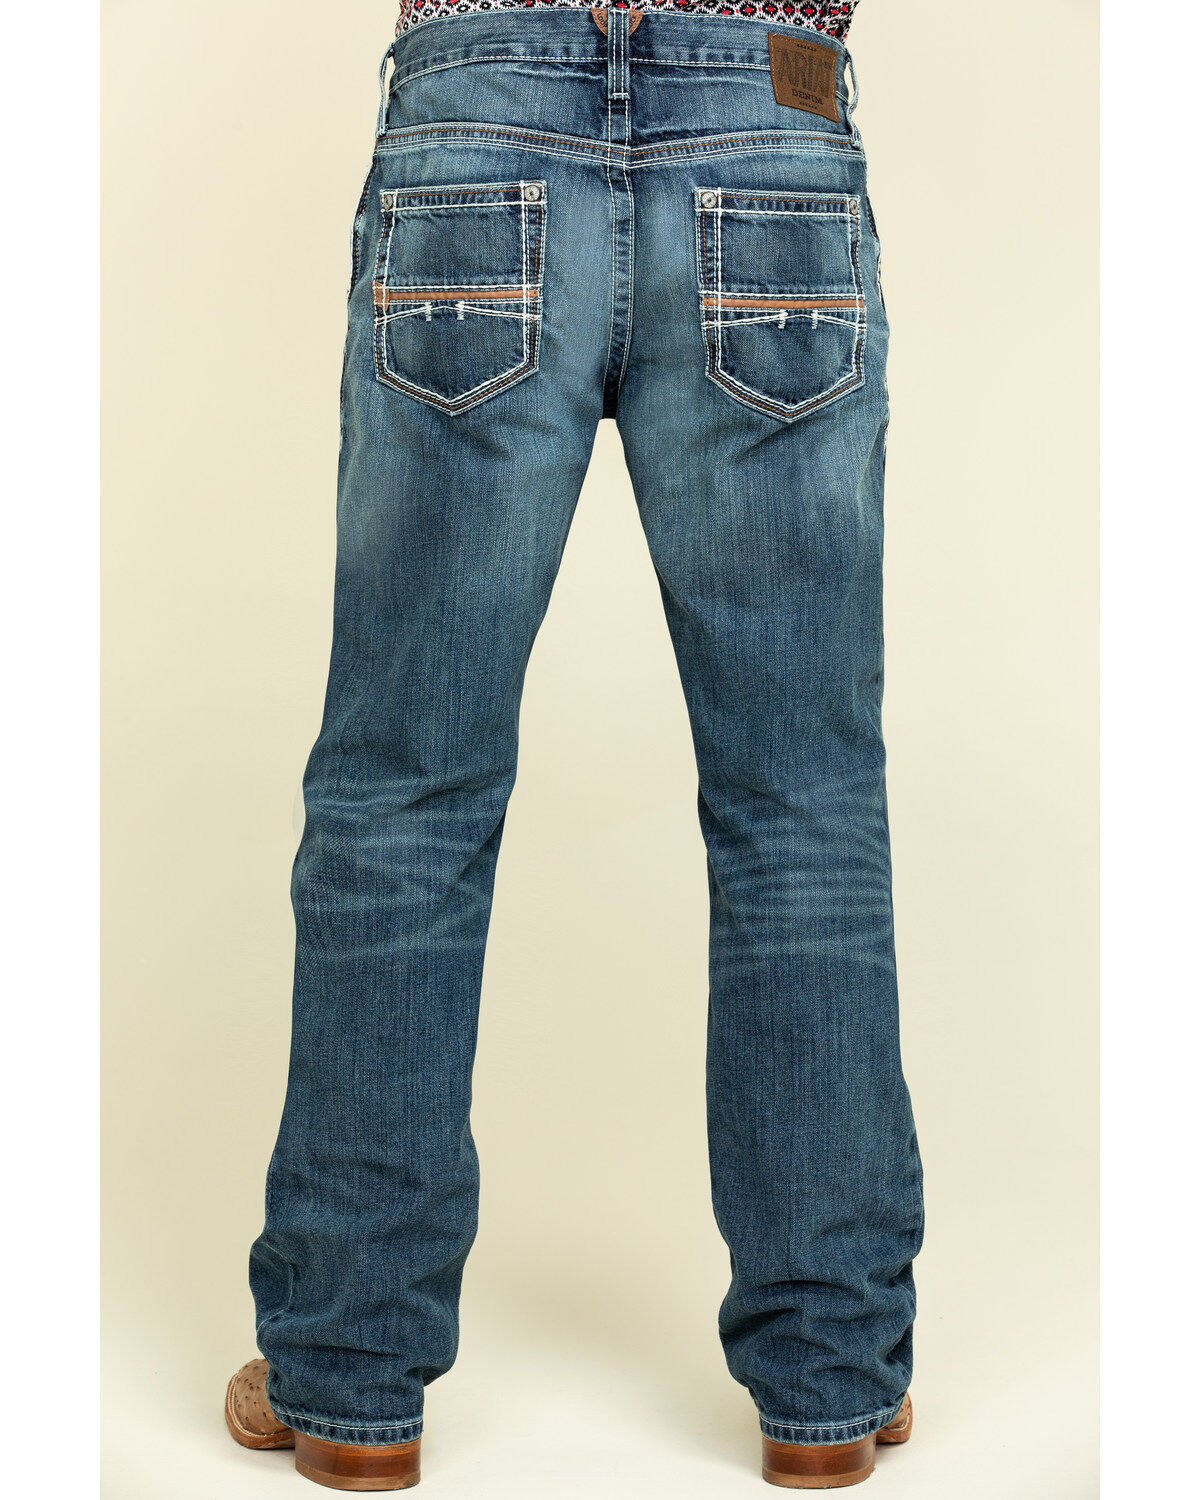 ariat men's jeans on sale